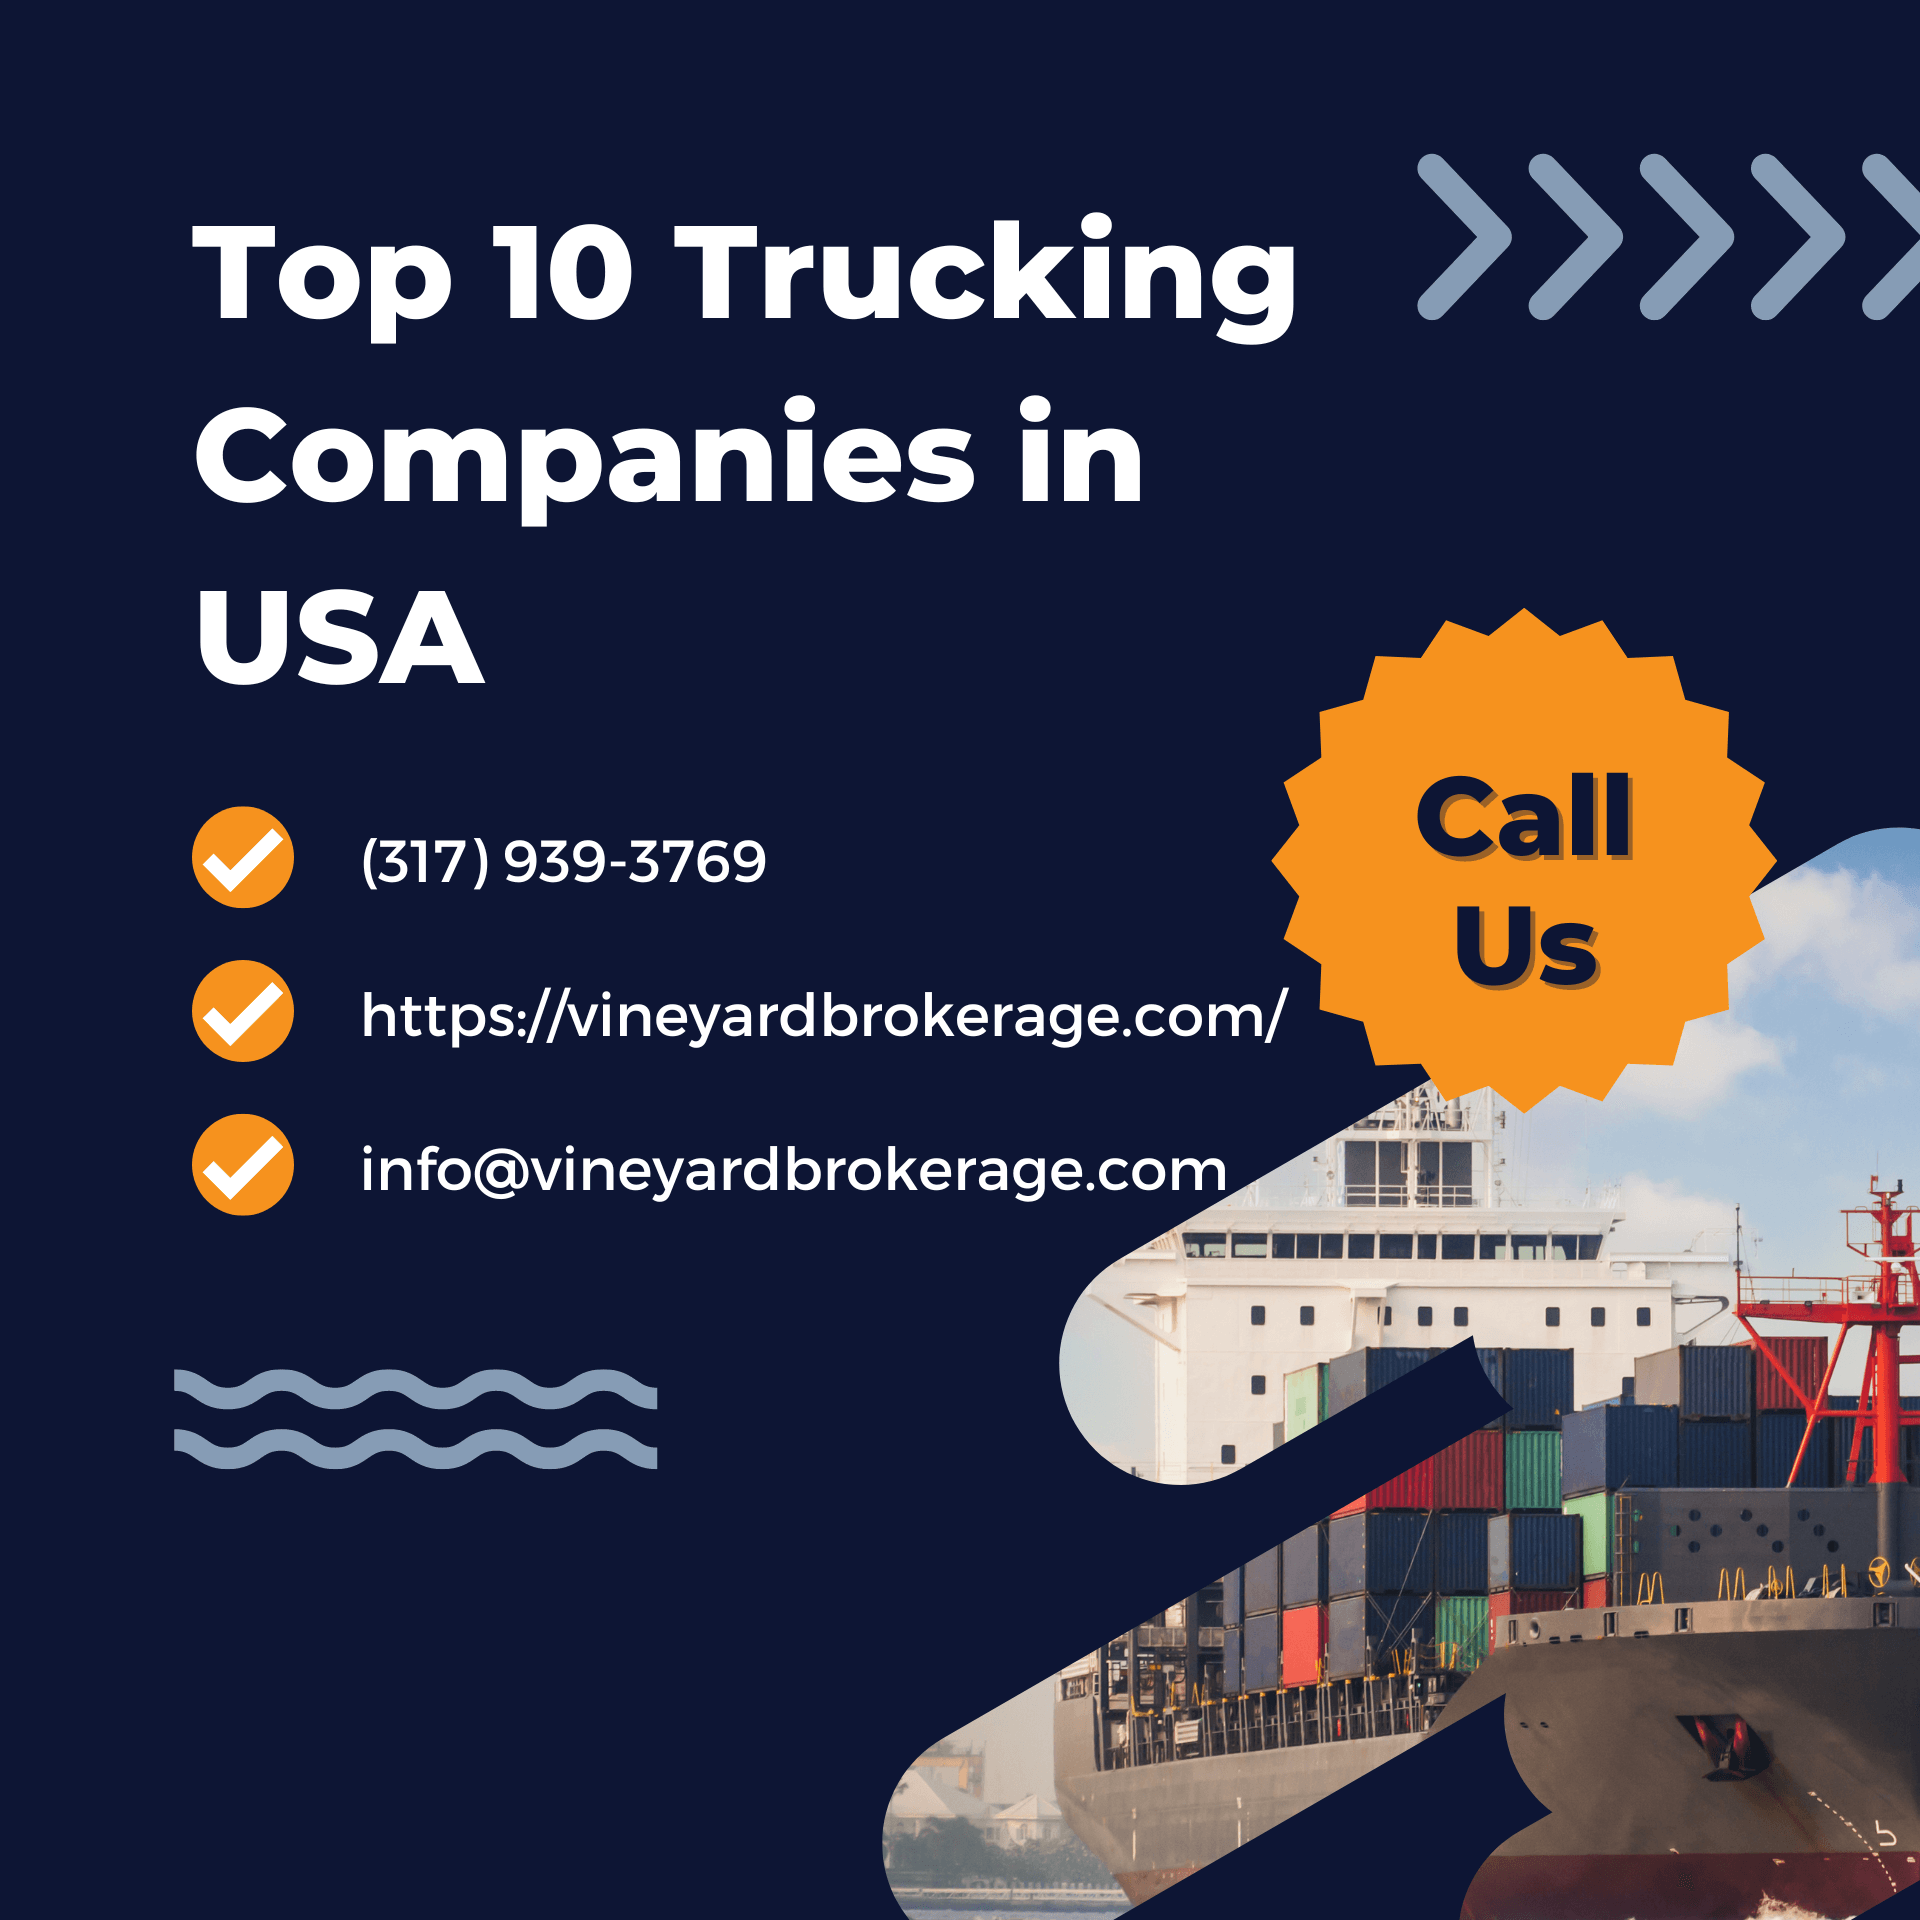 Top 10 Trucking Companies in USA